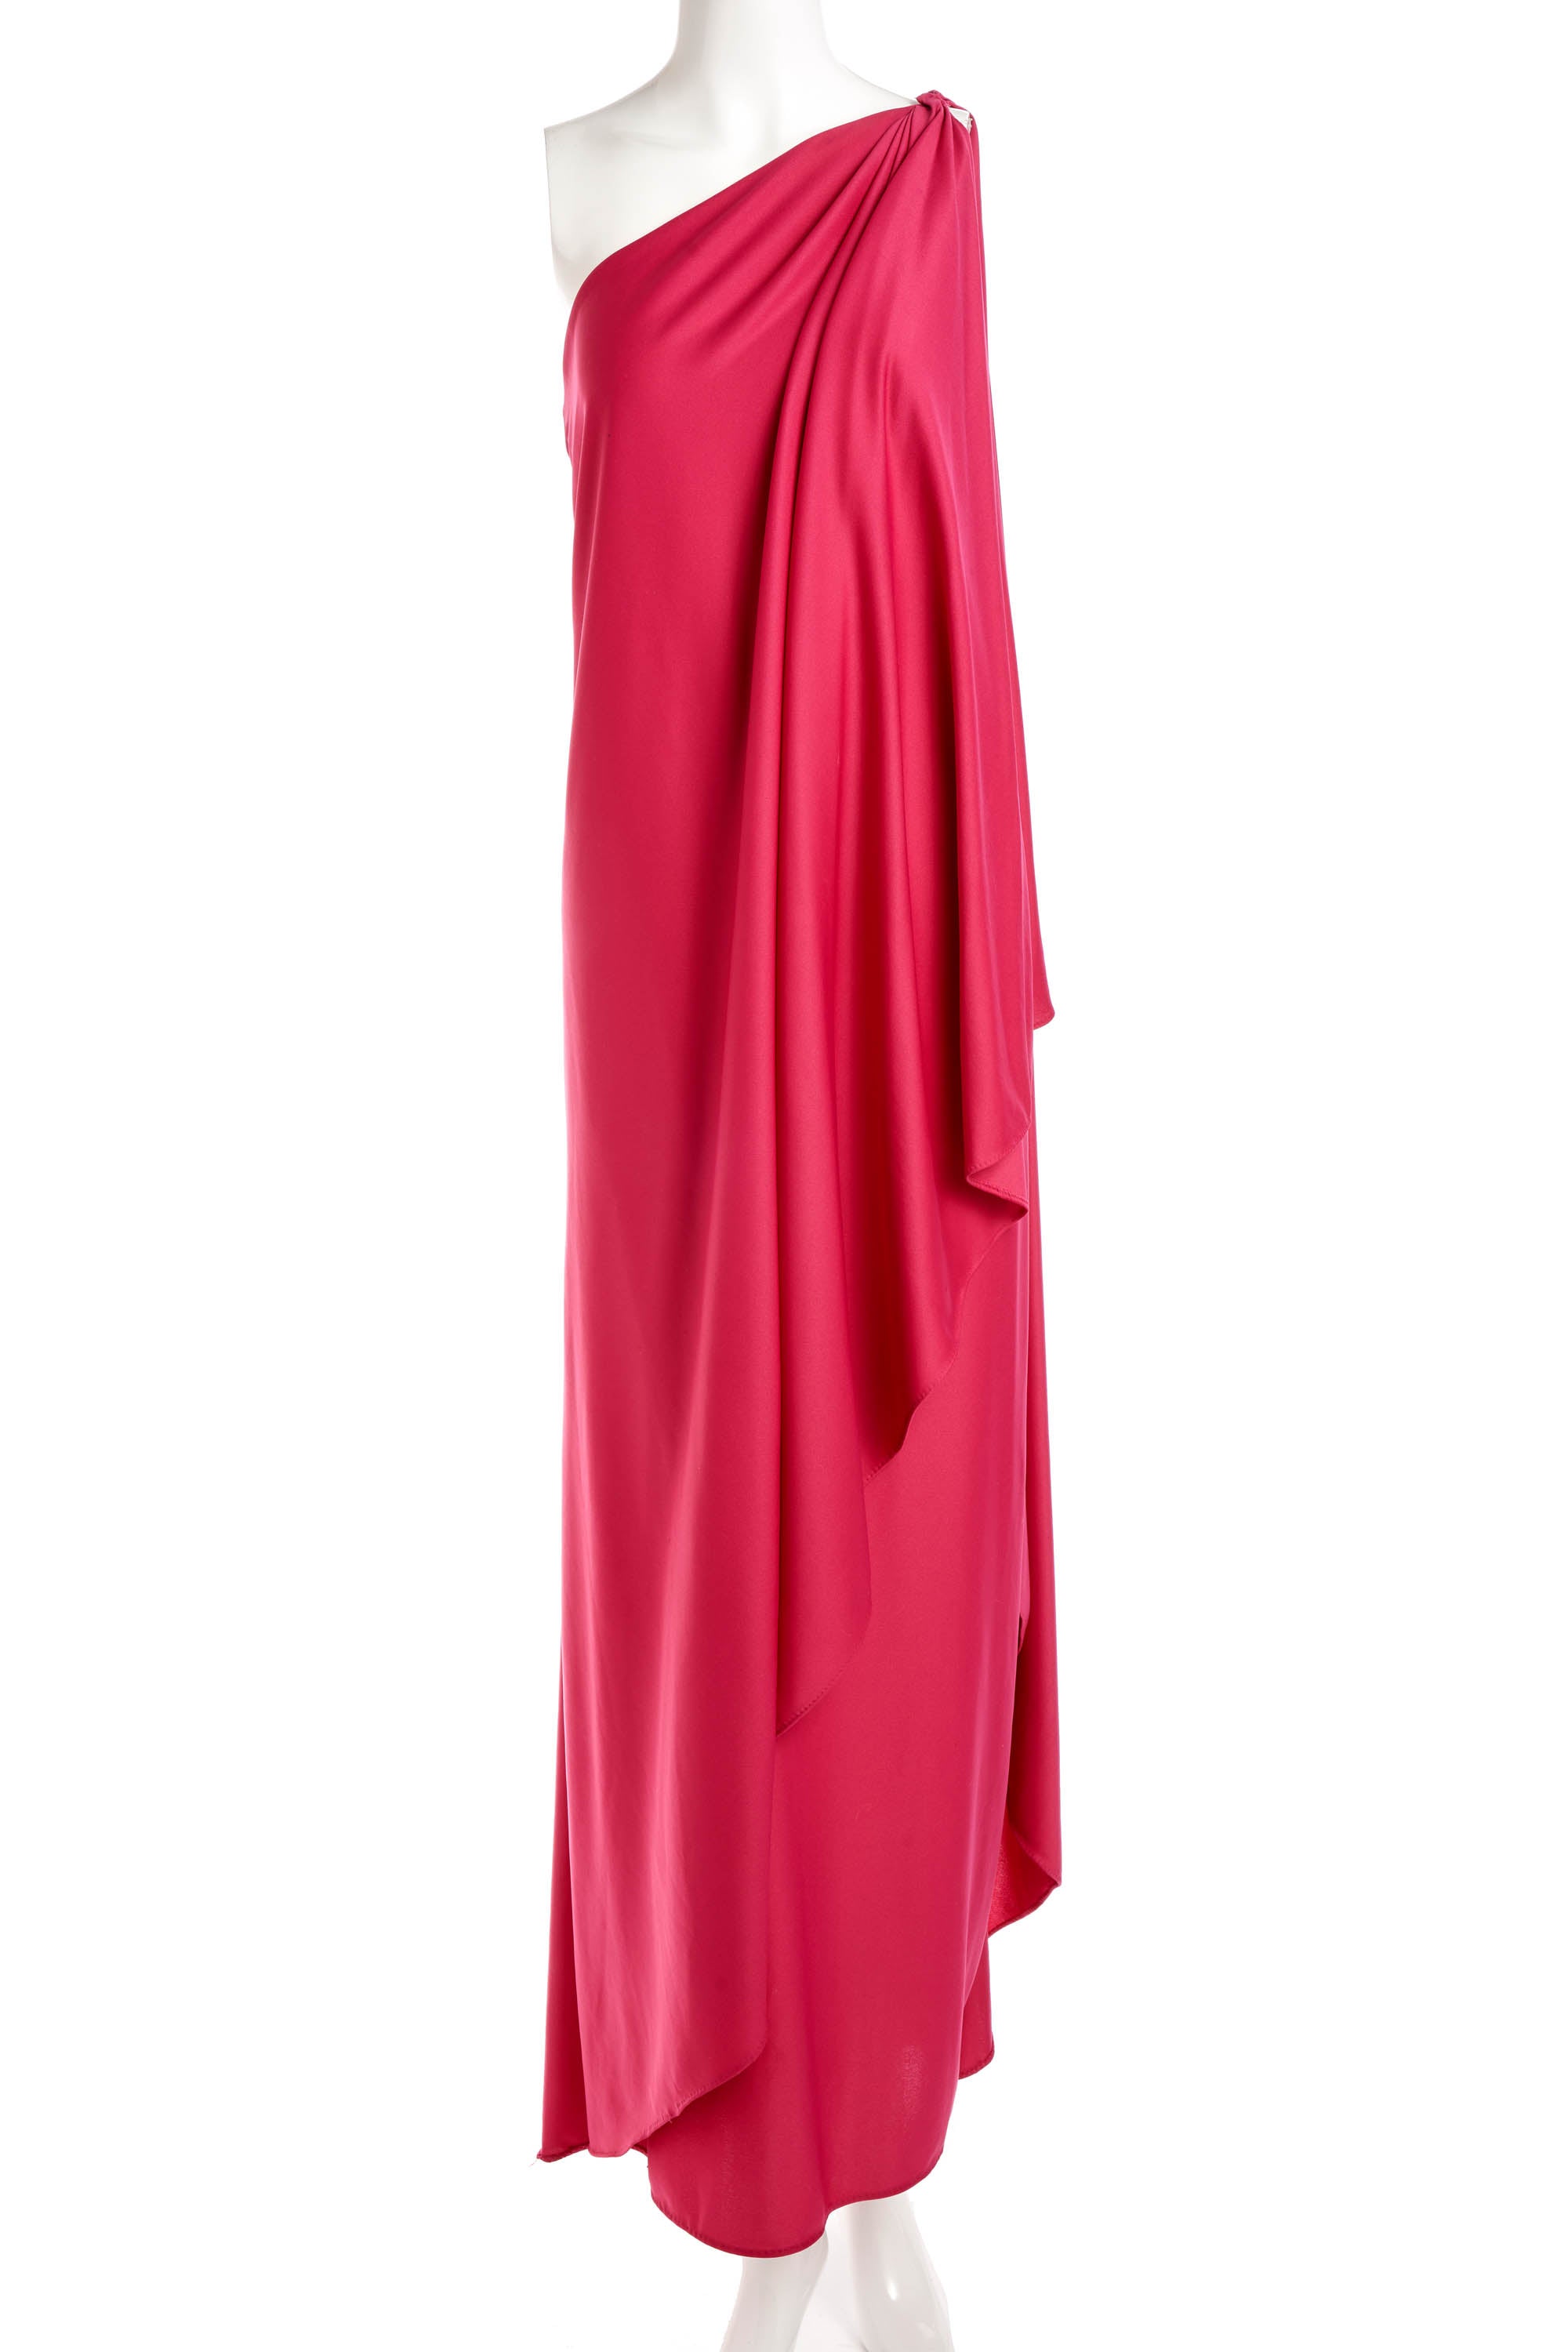 Halston IV 1970's Raspberry Maxi Dress - Foxy Couture Carmel